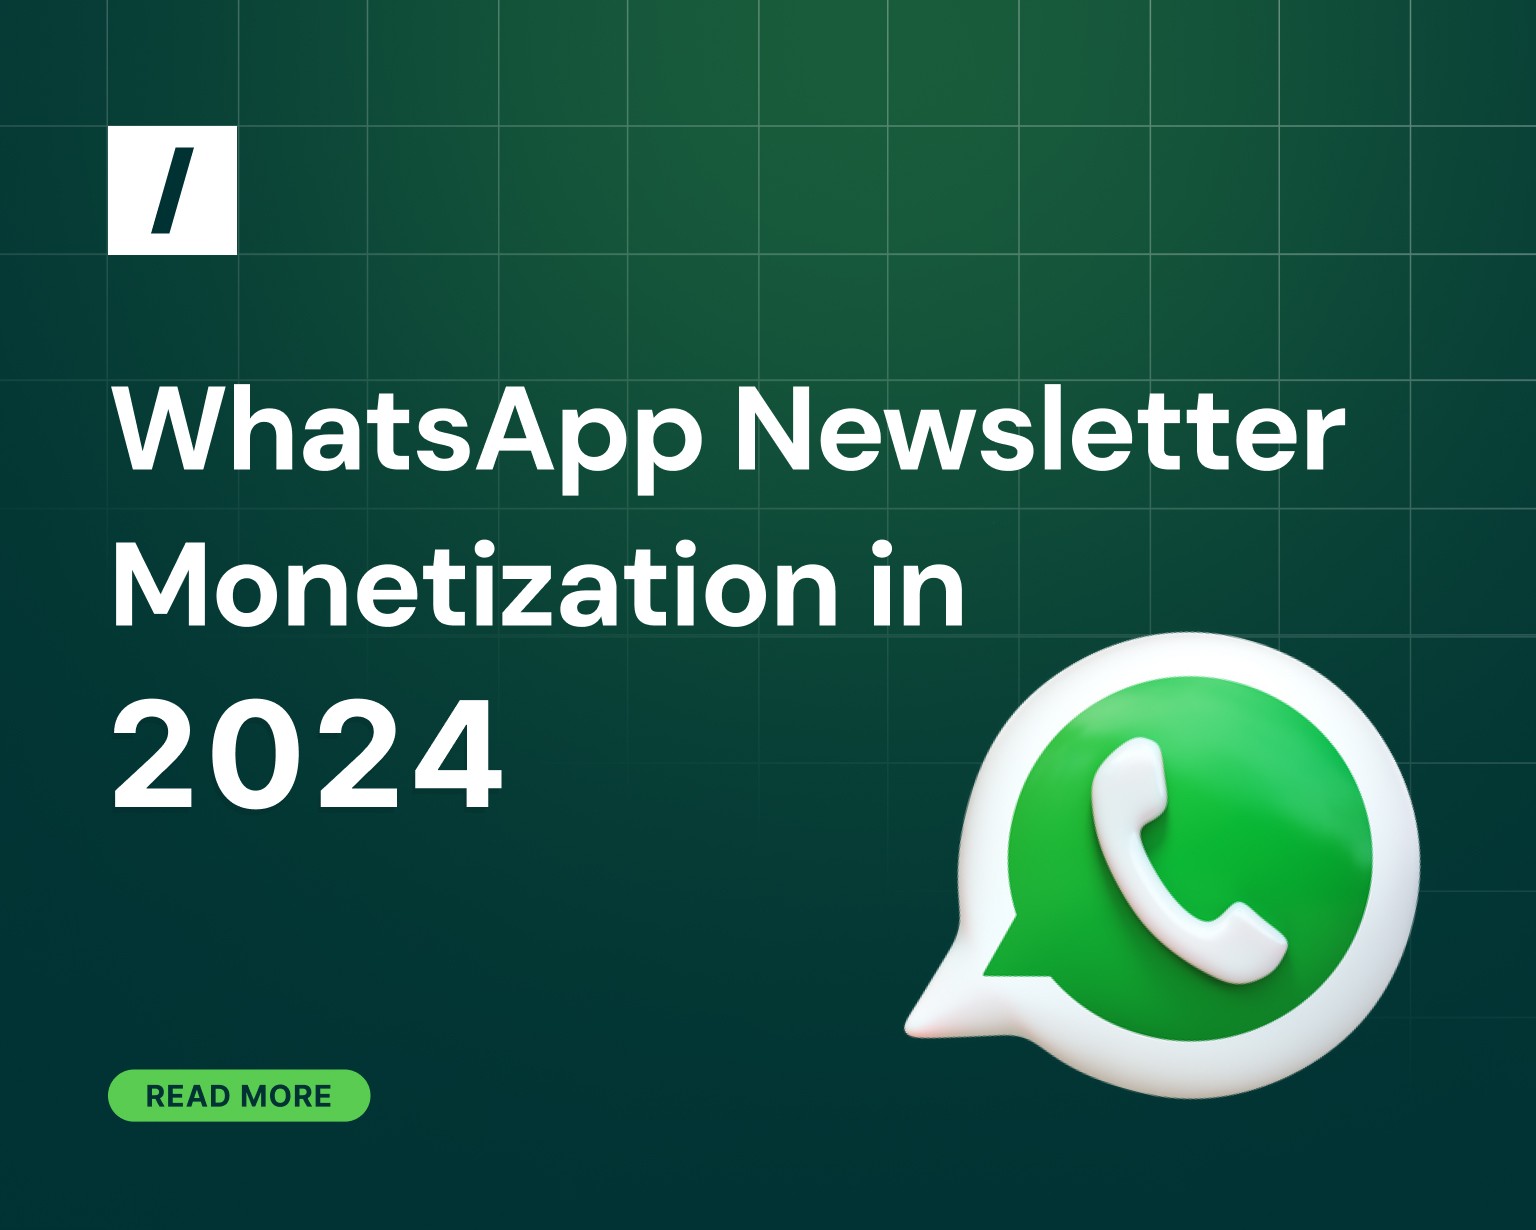 WhatsApp newsletter monetization in 2024